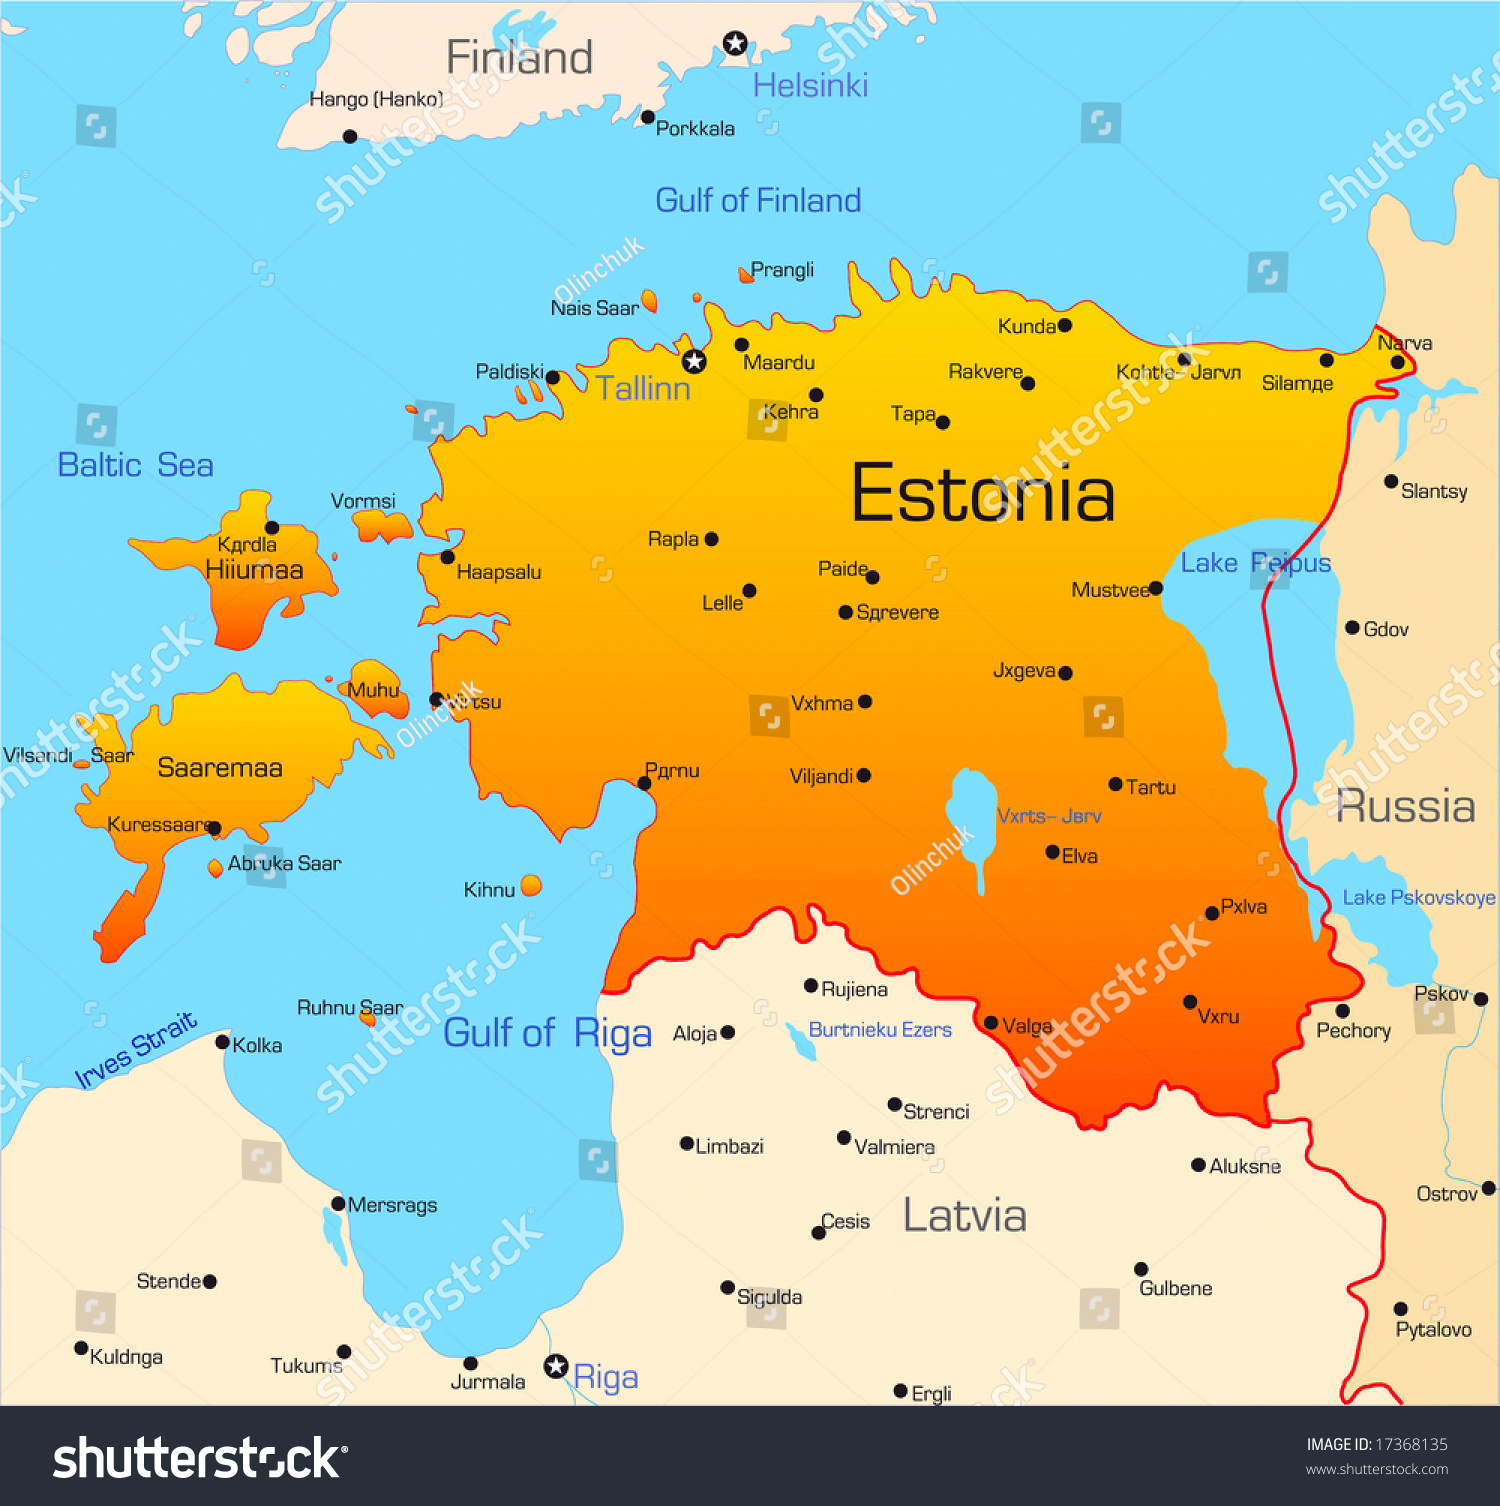 Estonia country